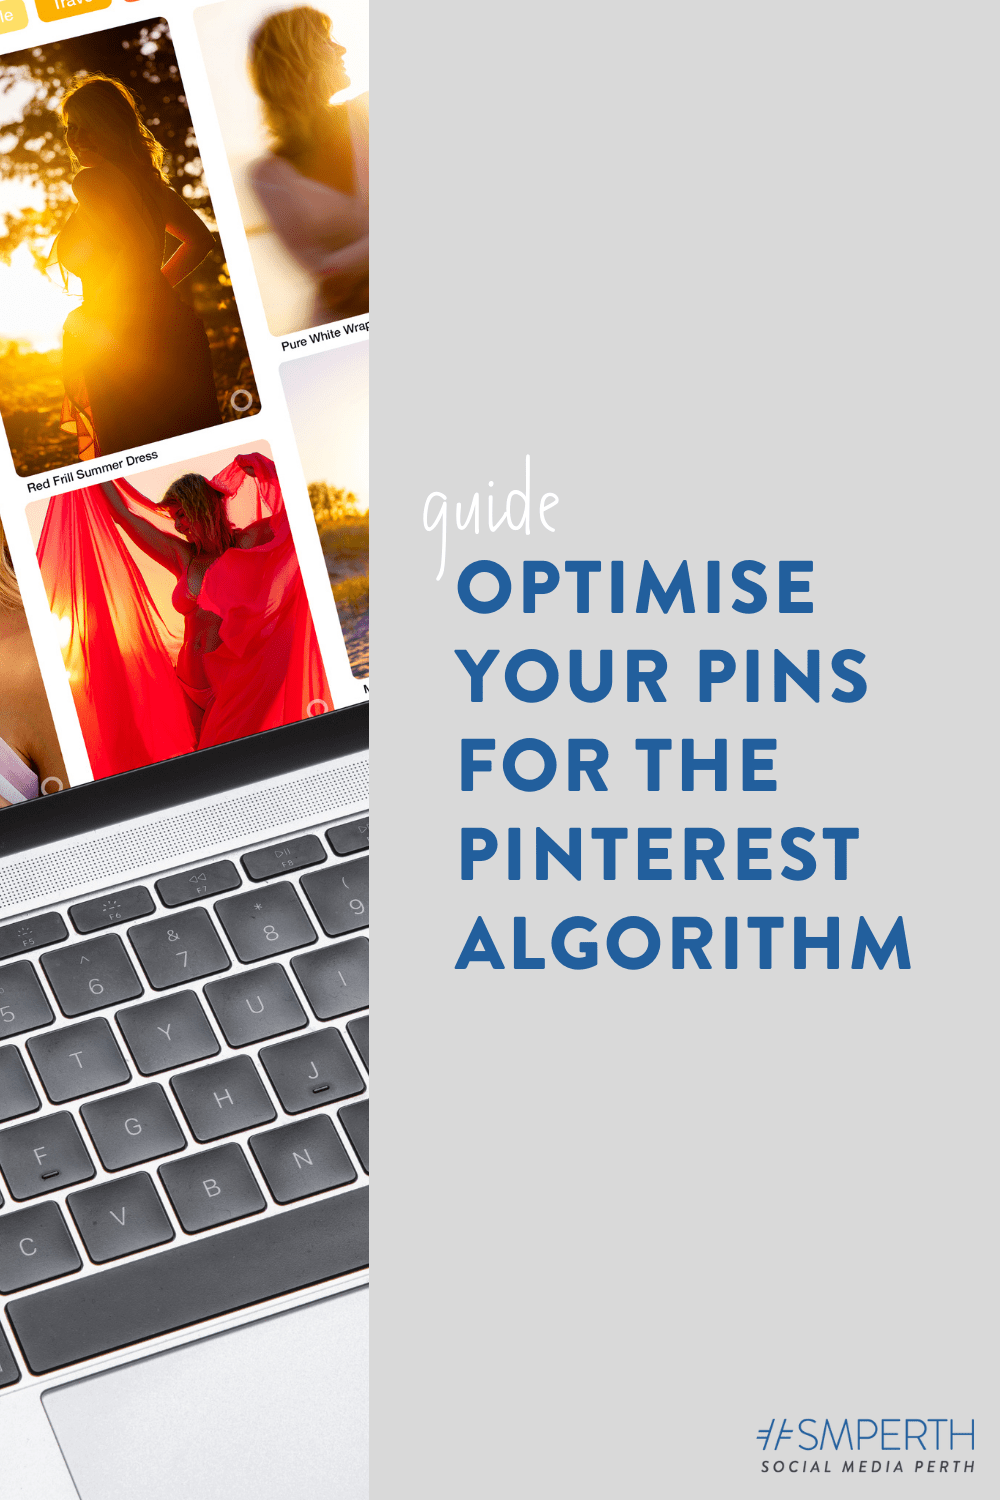 4 factors to optimise your pins for the Pinterest algorithm